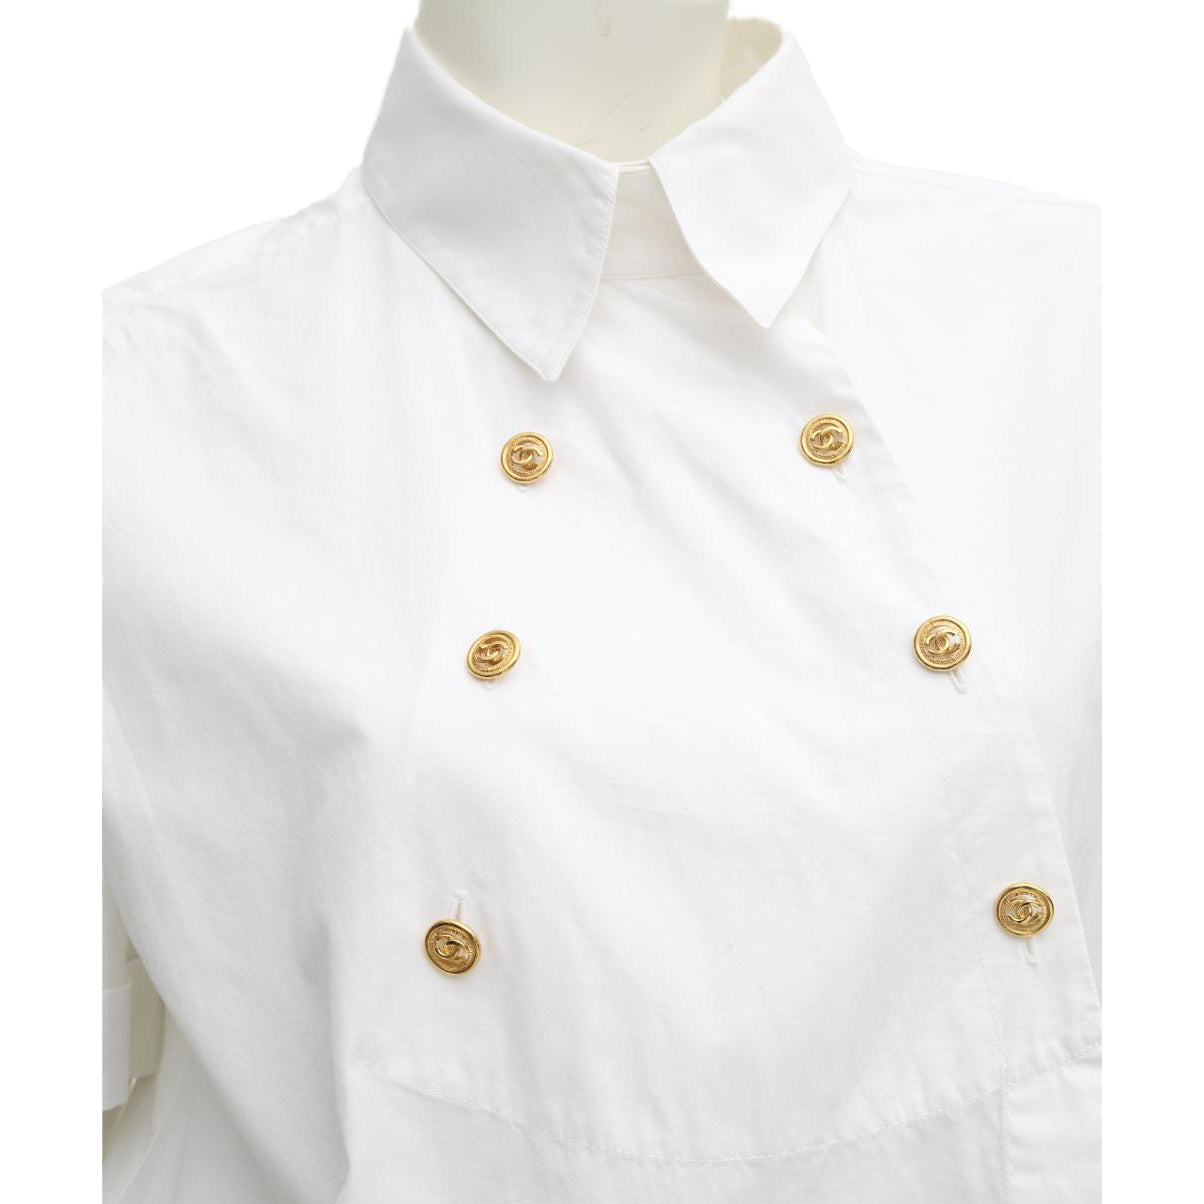 A Wise Choice Chanel Button-Down Shirt, chanel white button down shirt 